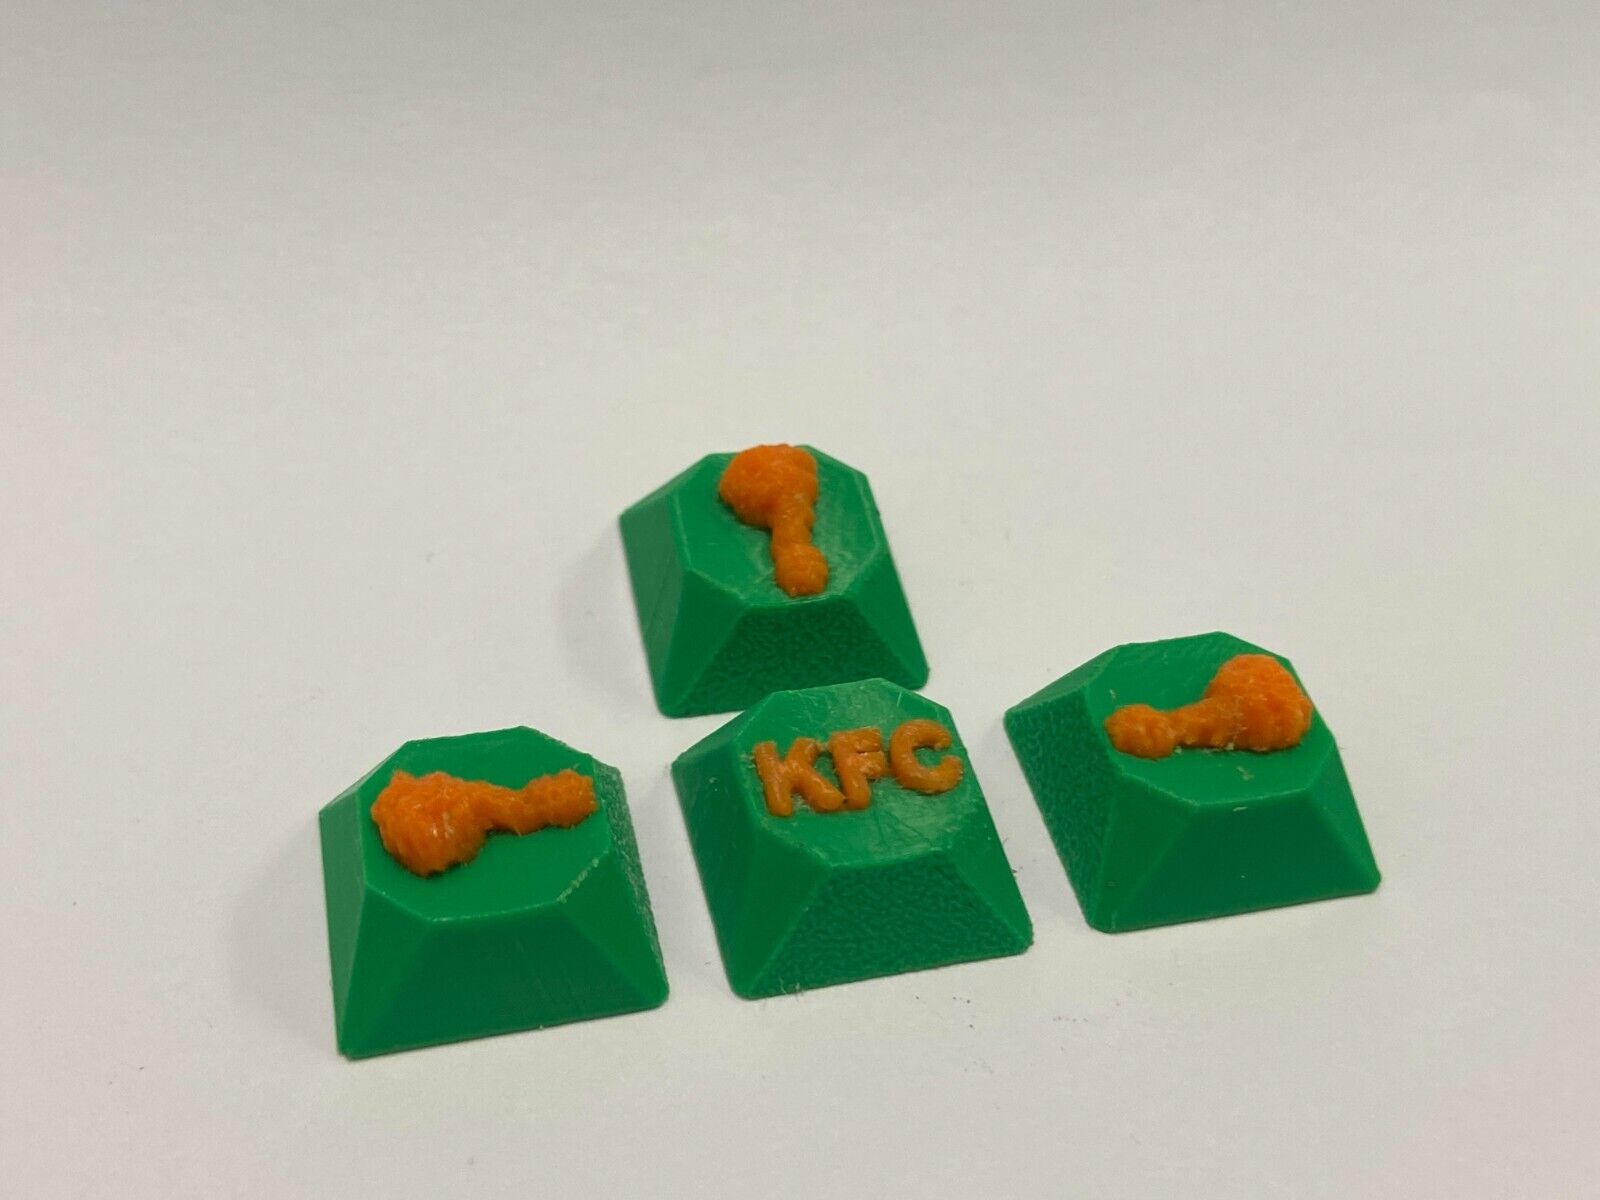 3D Printed Custom Made Key Caps (Multi-color is included). Set of 4 keys.